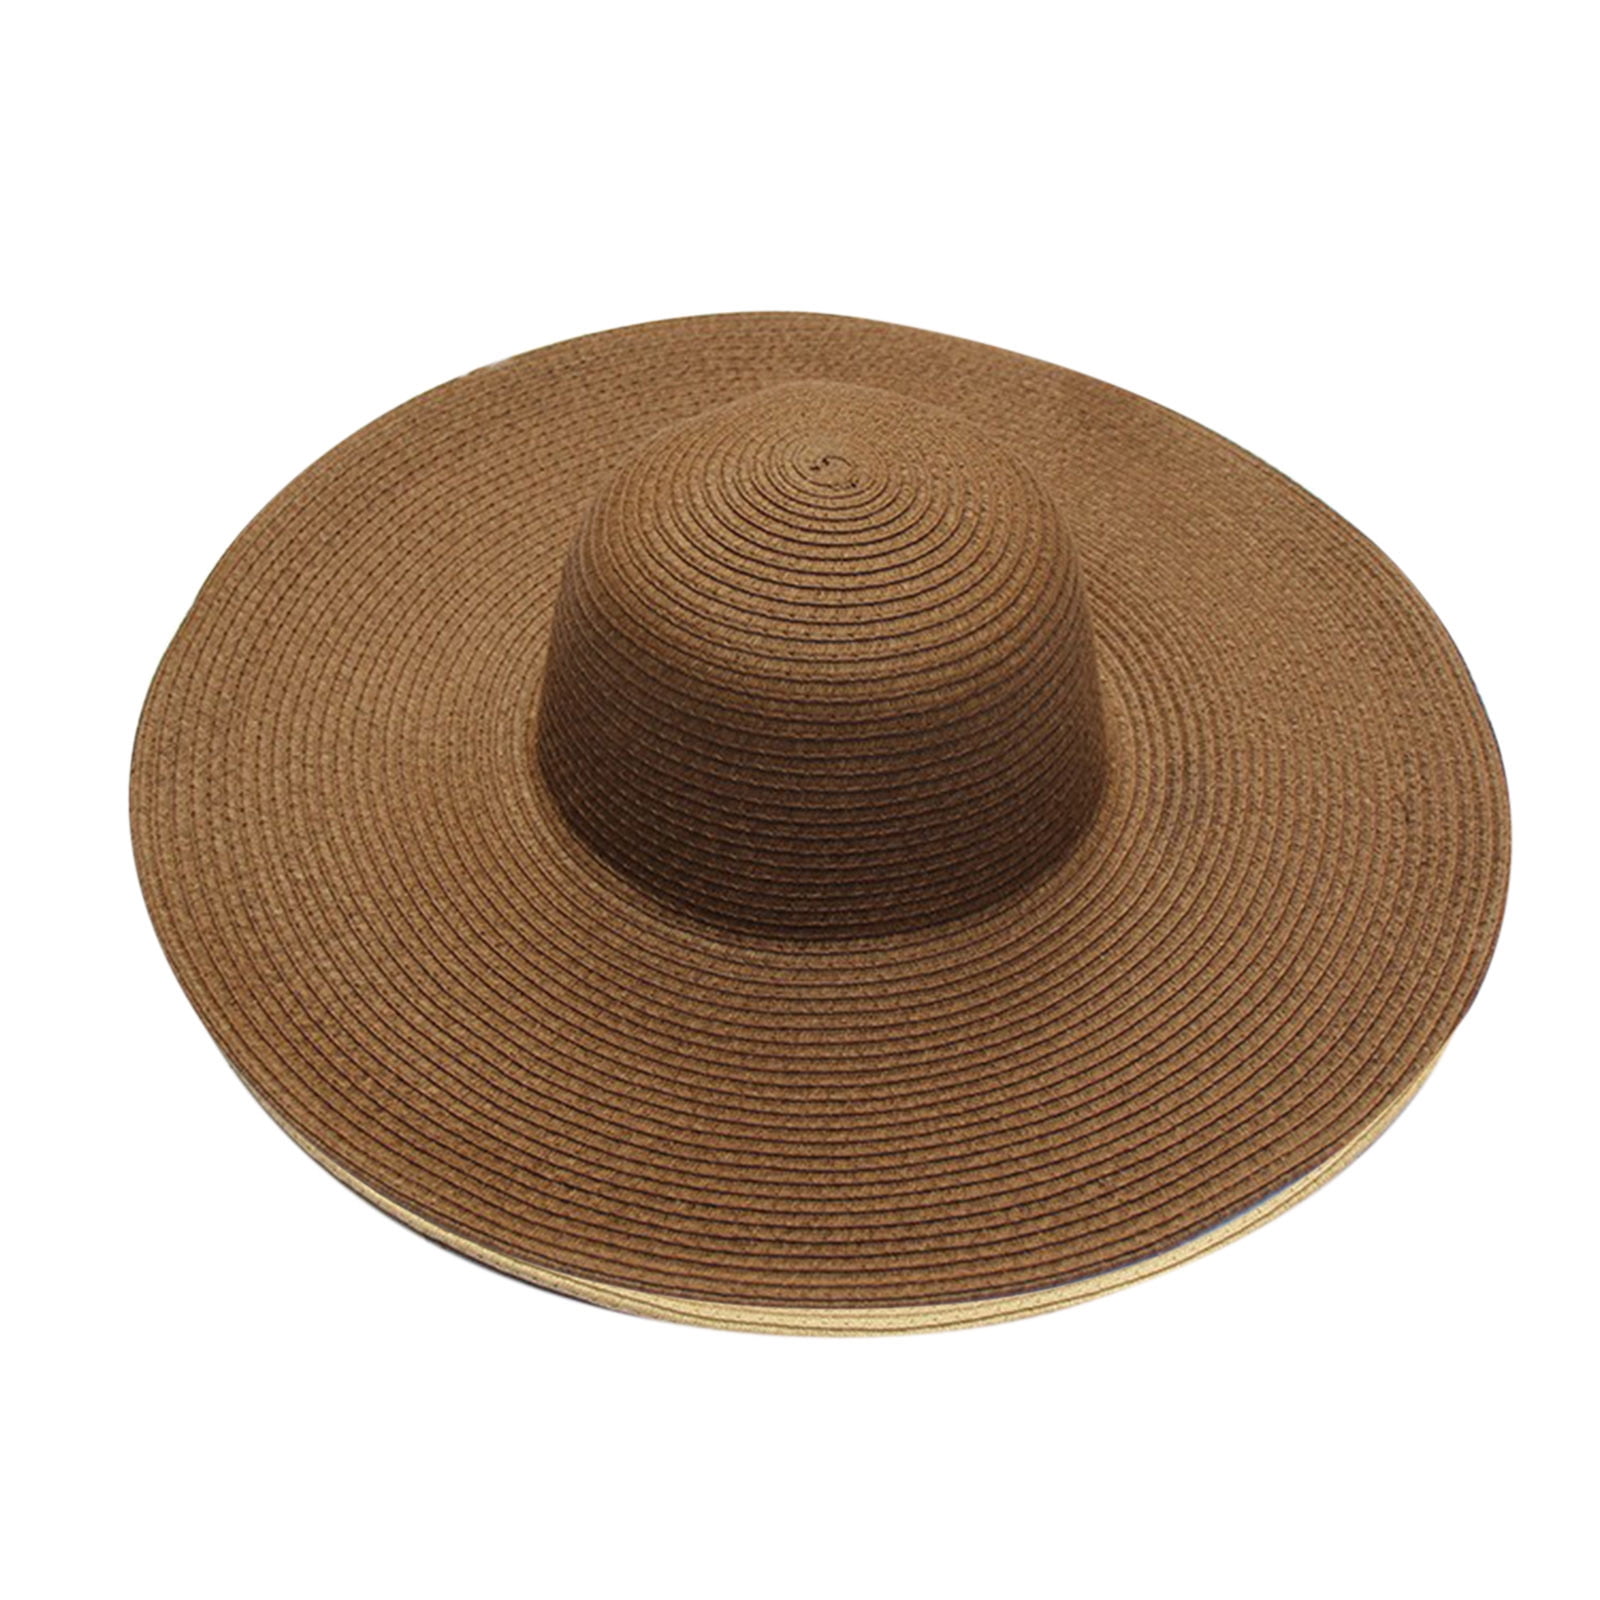 HSMQHJWE Fishing Cap Sunshade Hat Women Ponytail Summer Hats For